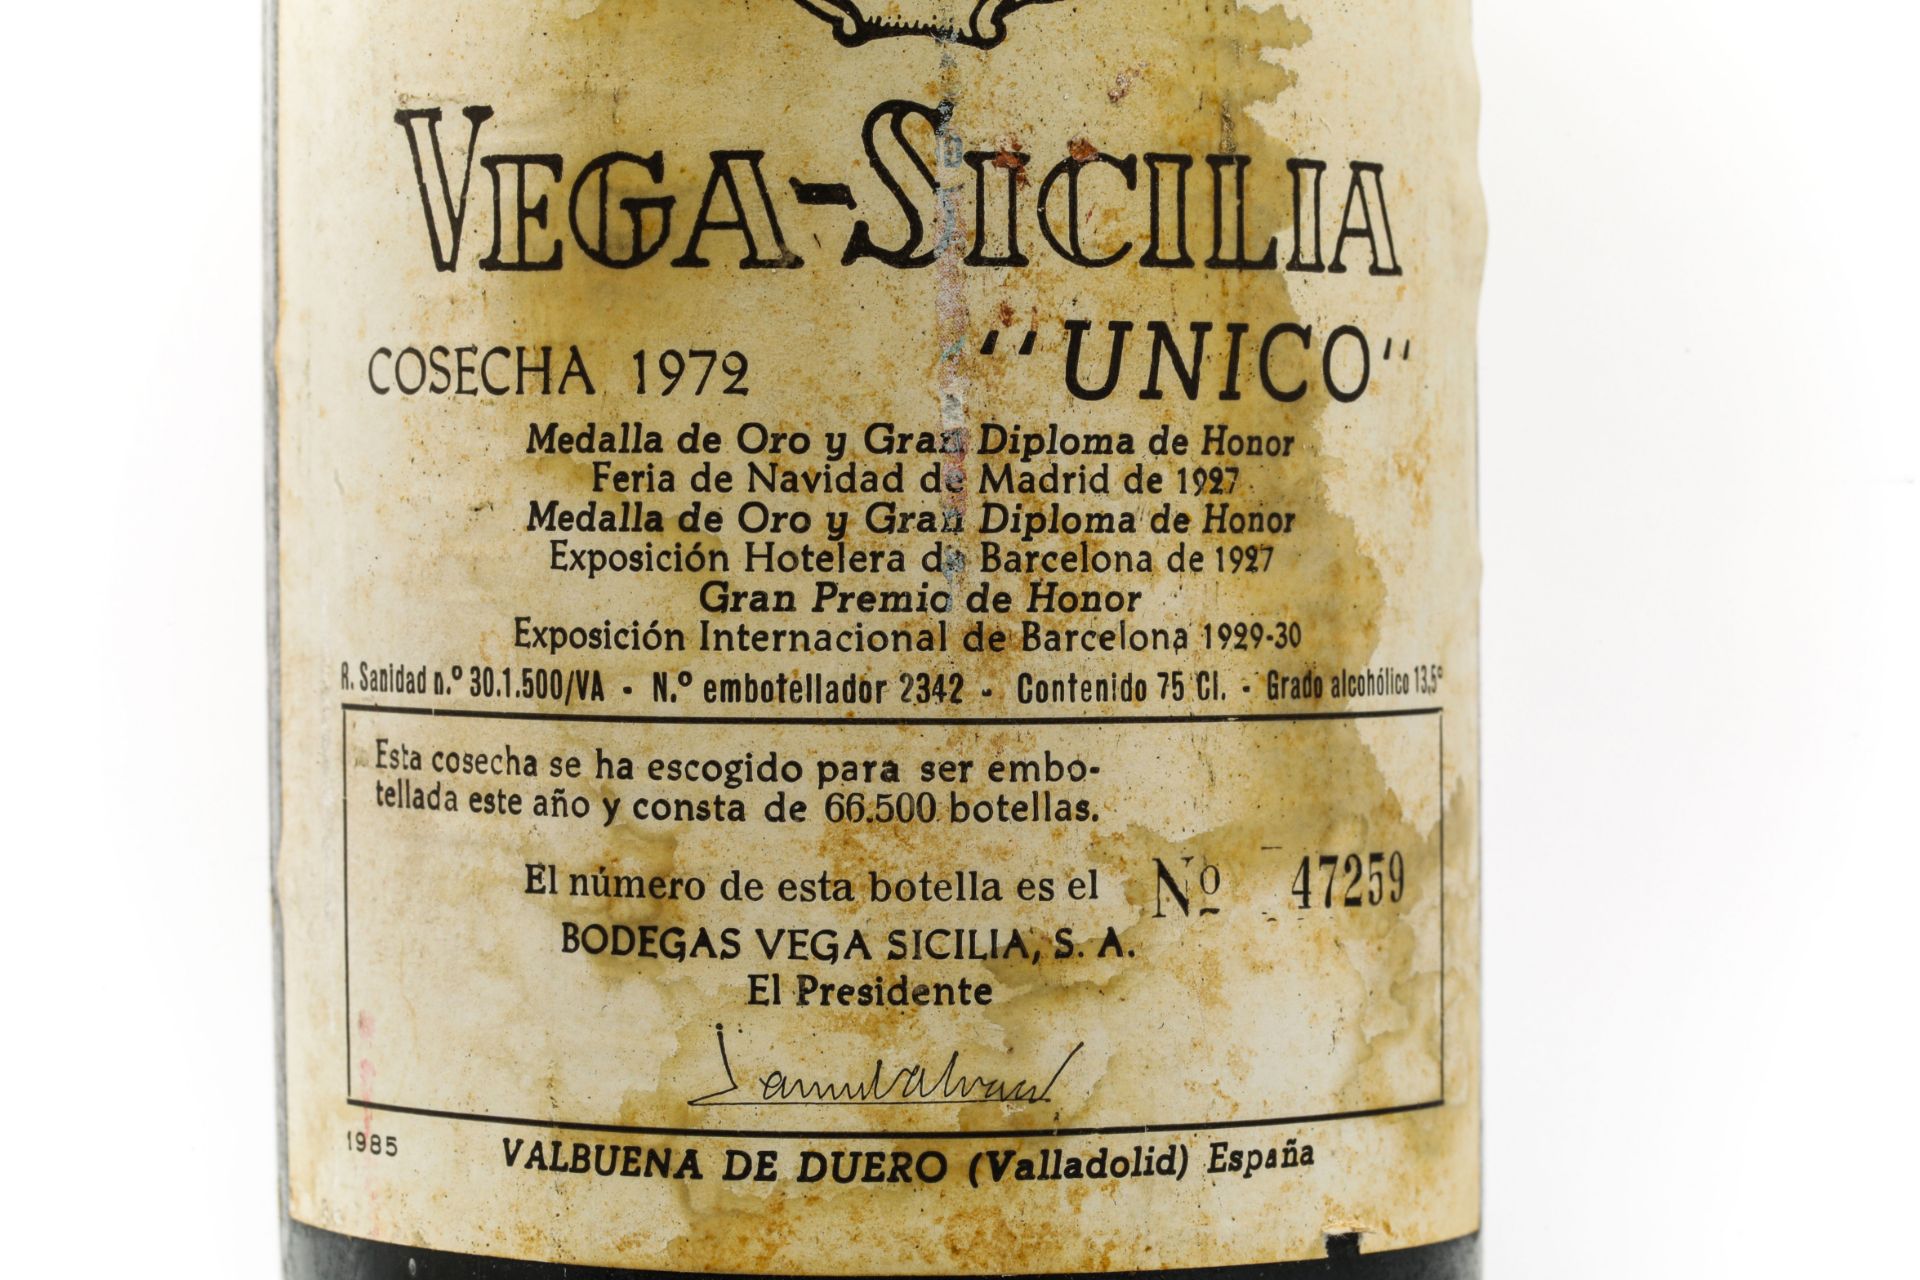 VEGA SICILIO UNICO sur production de 66 500 bouteilles Ribeira del Duero 1972 - Image 4 of 8